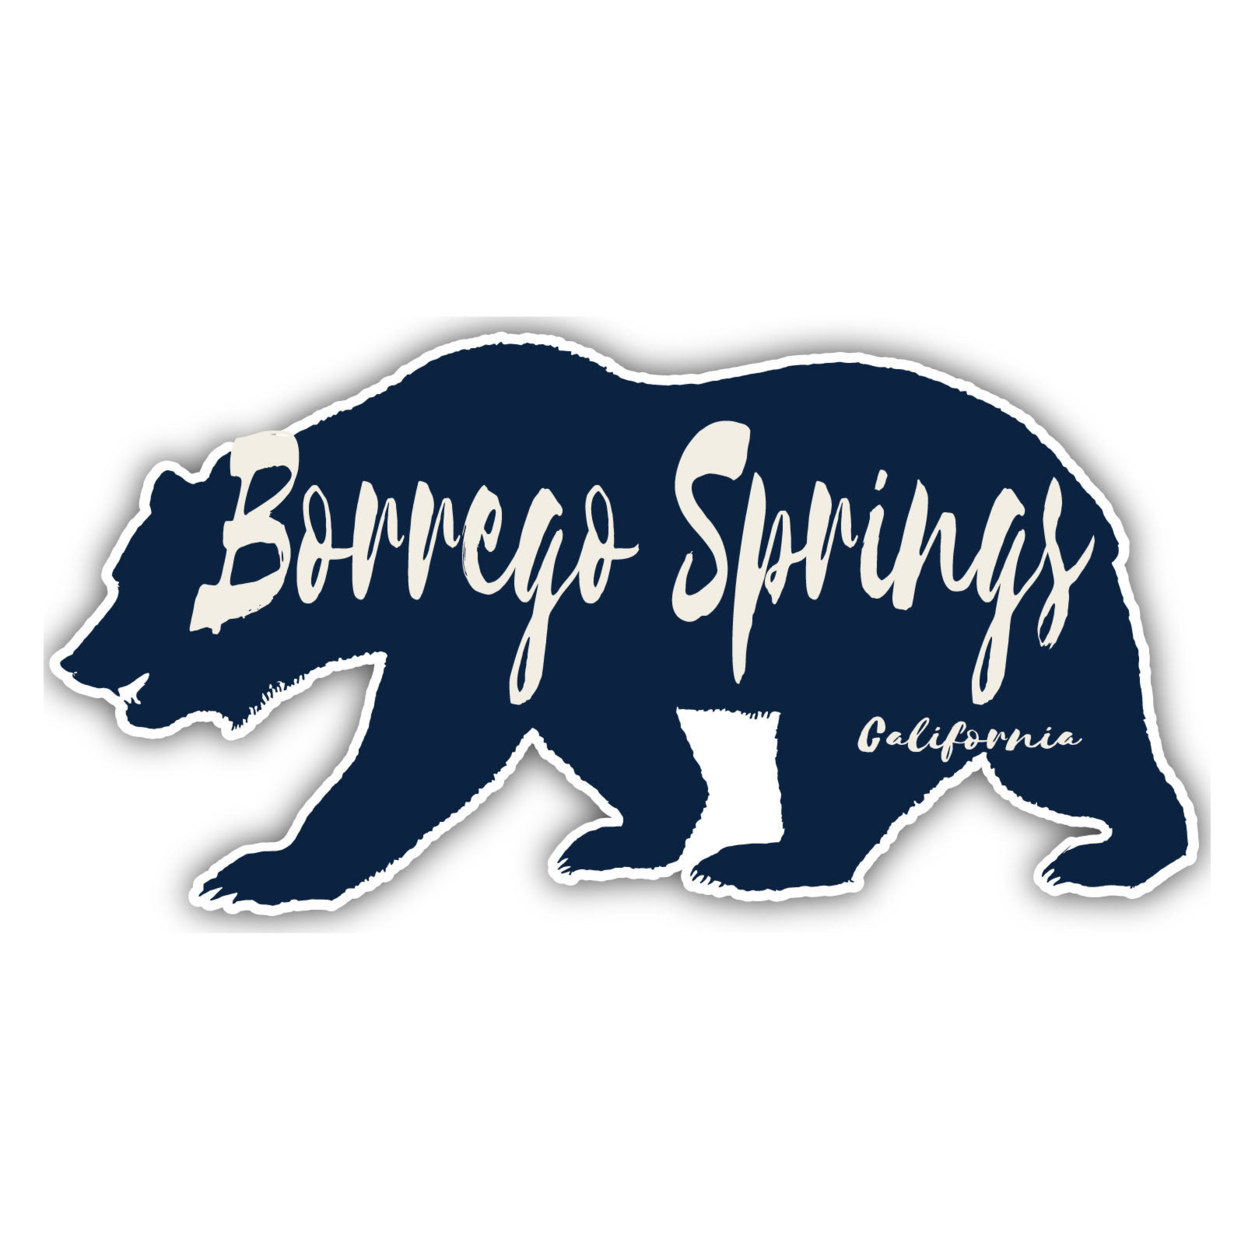 Borrego Springs California Souvenir Decorative Stickers (Choose Theme And Size) - Single Unit, 4-Inch, Bear